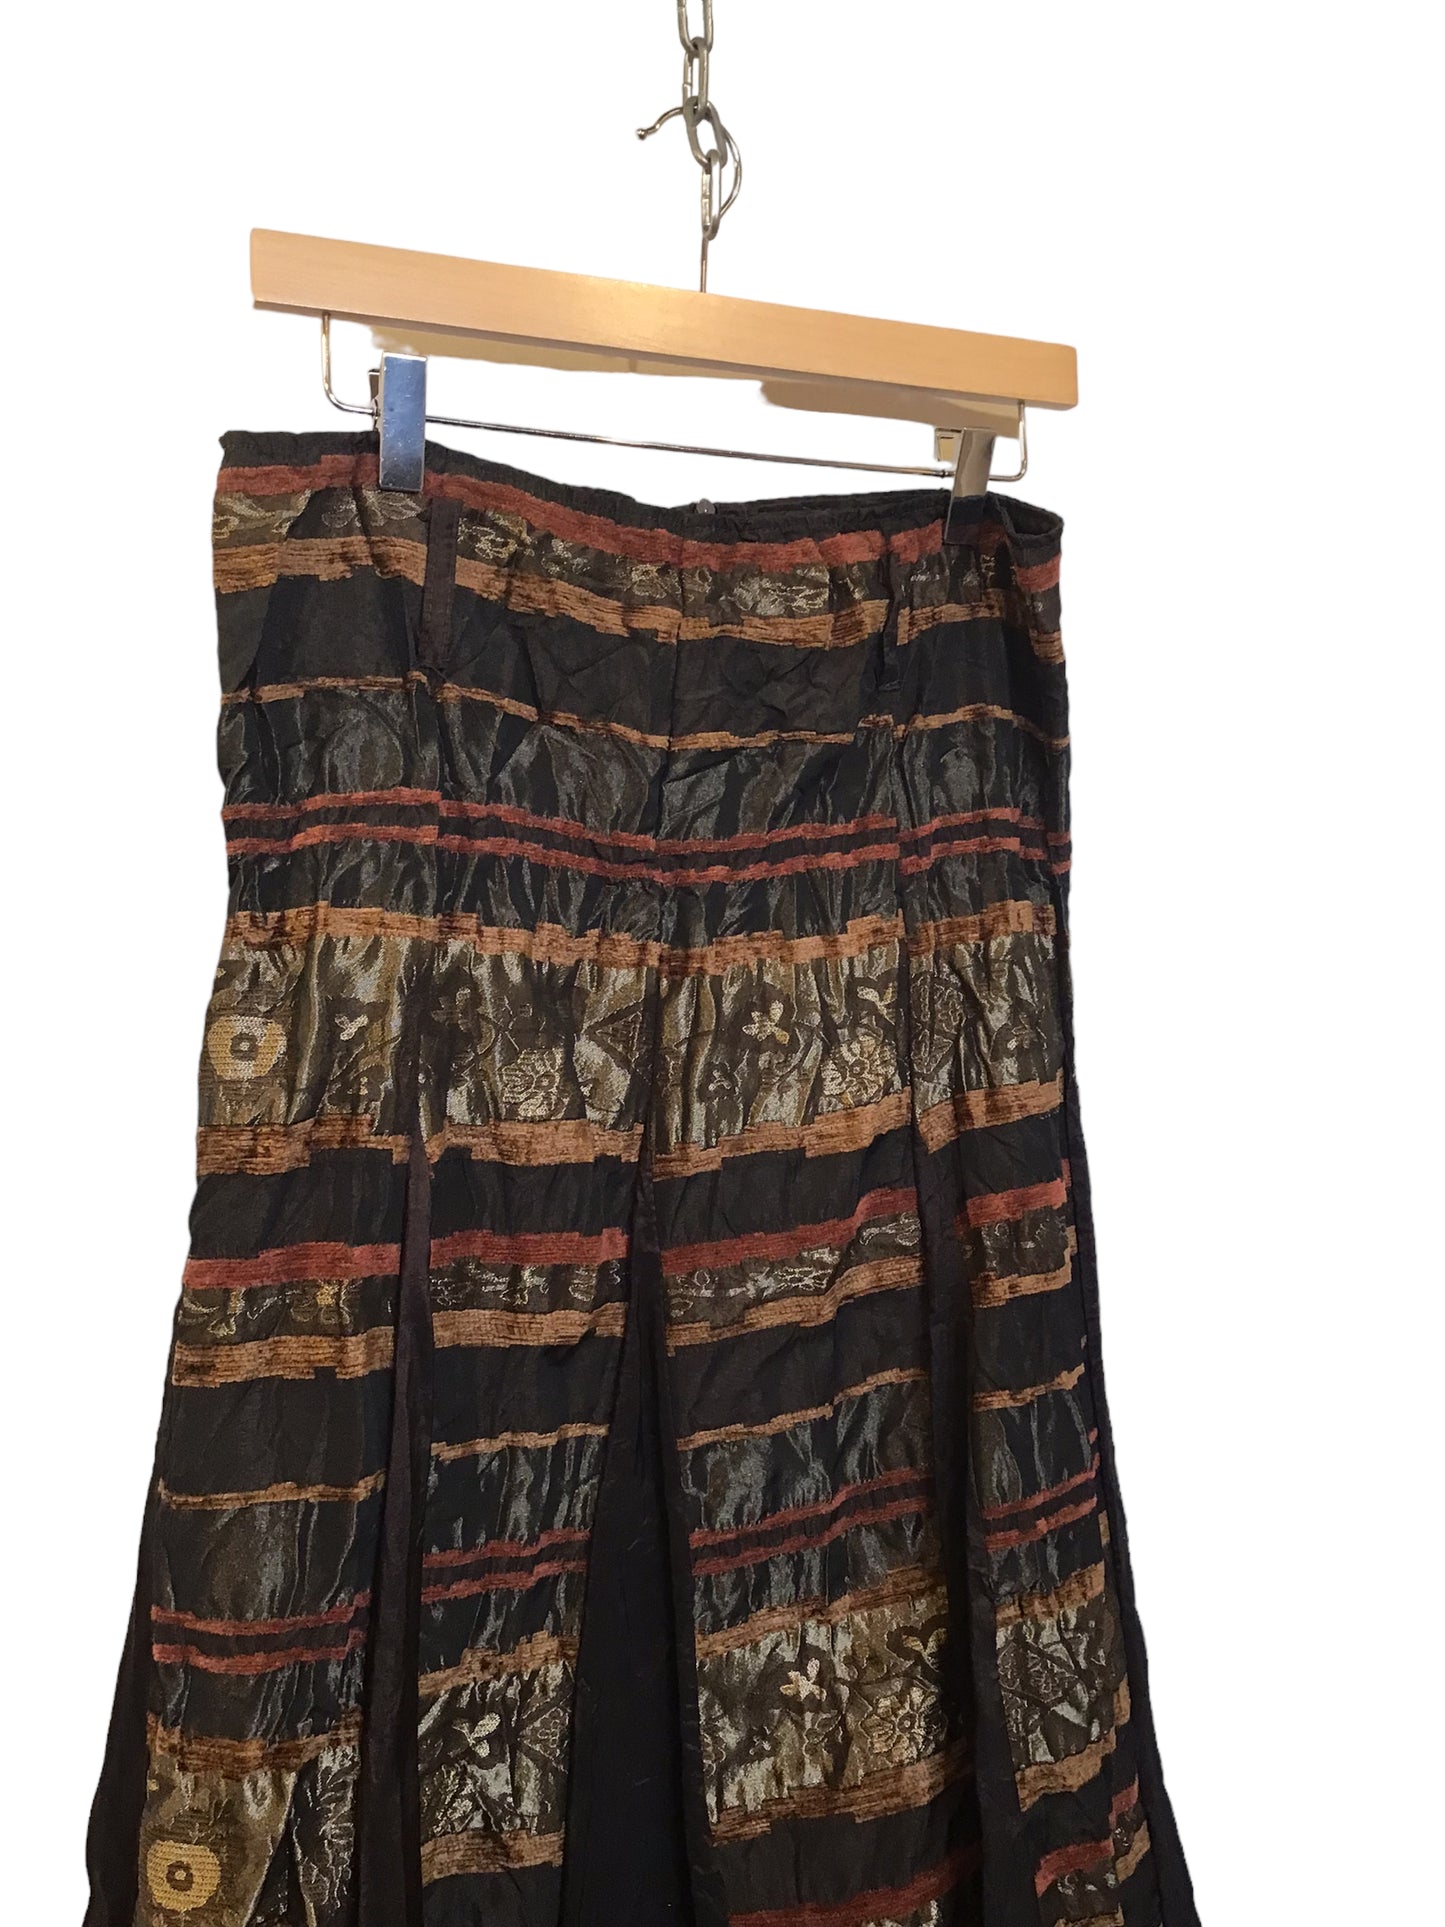 Patterned Skirt (Size L)